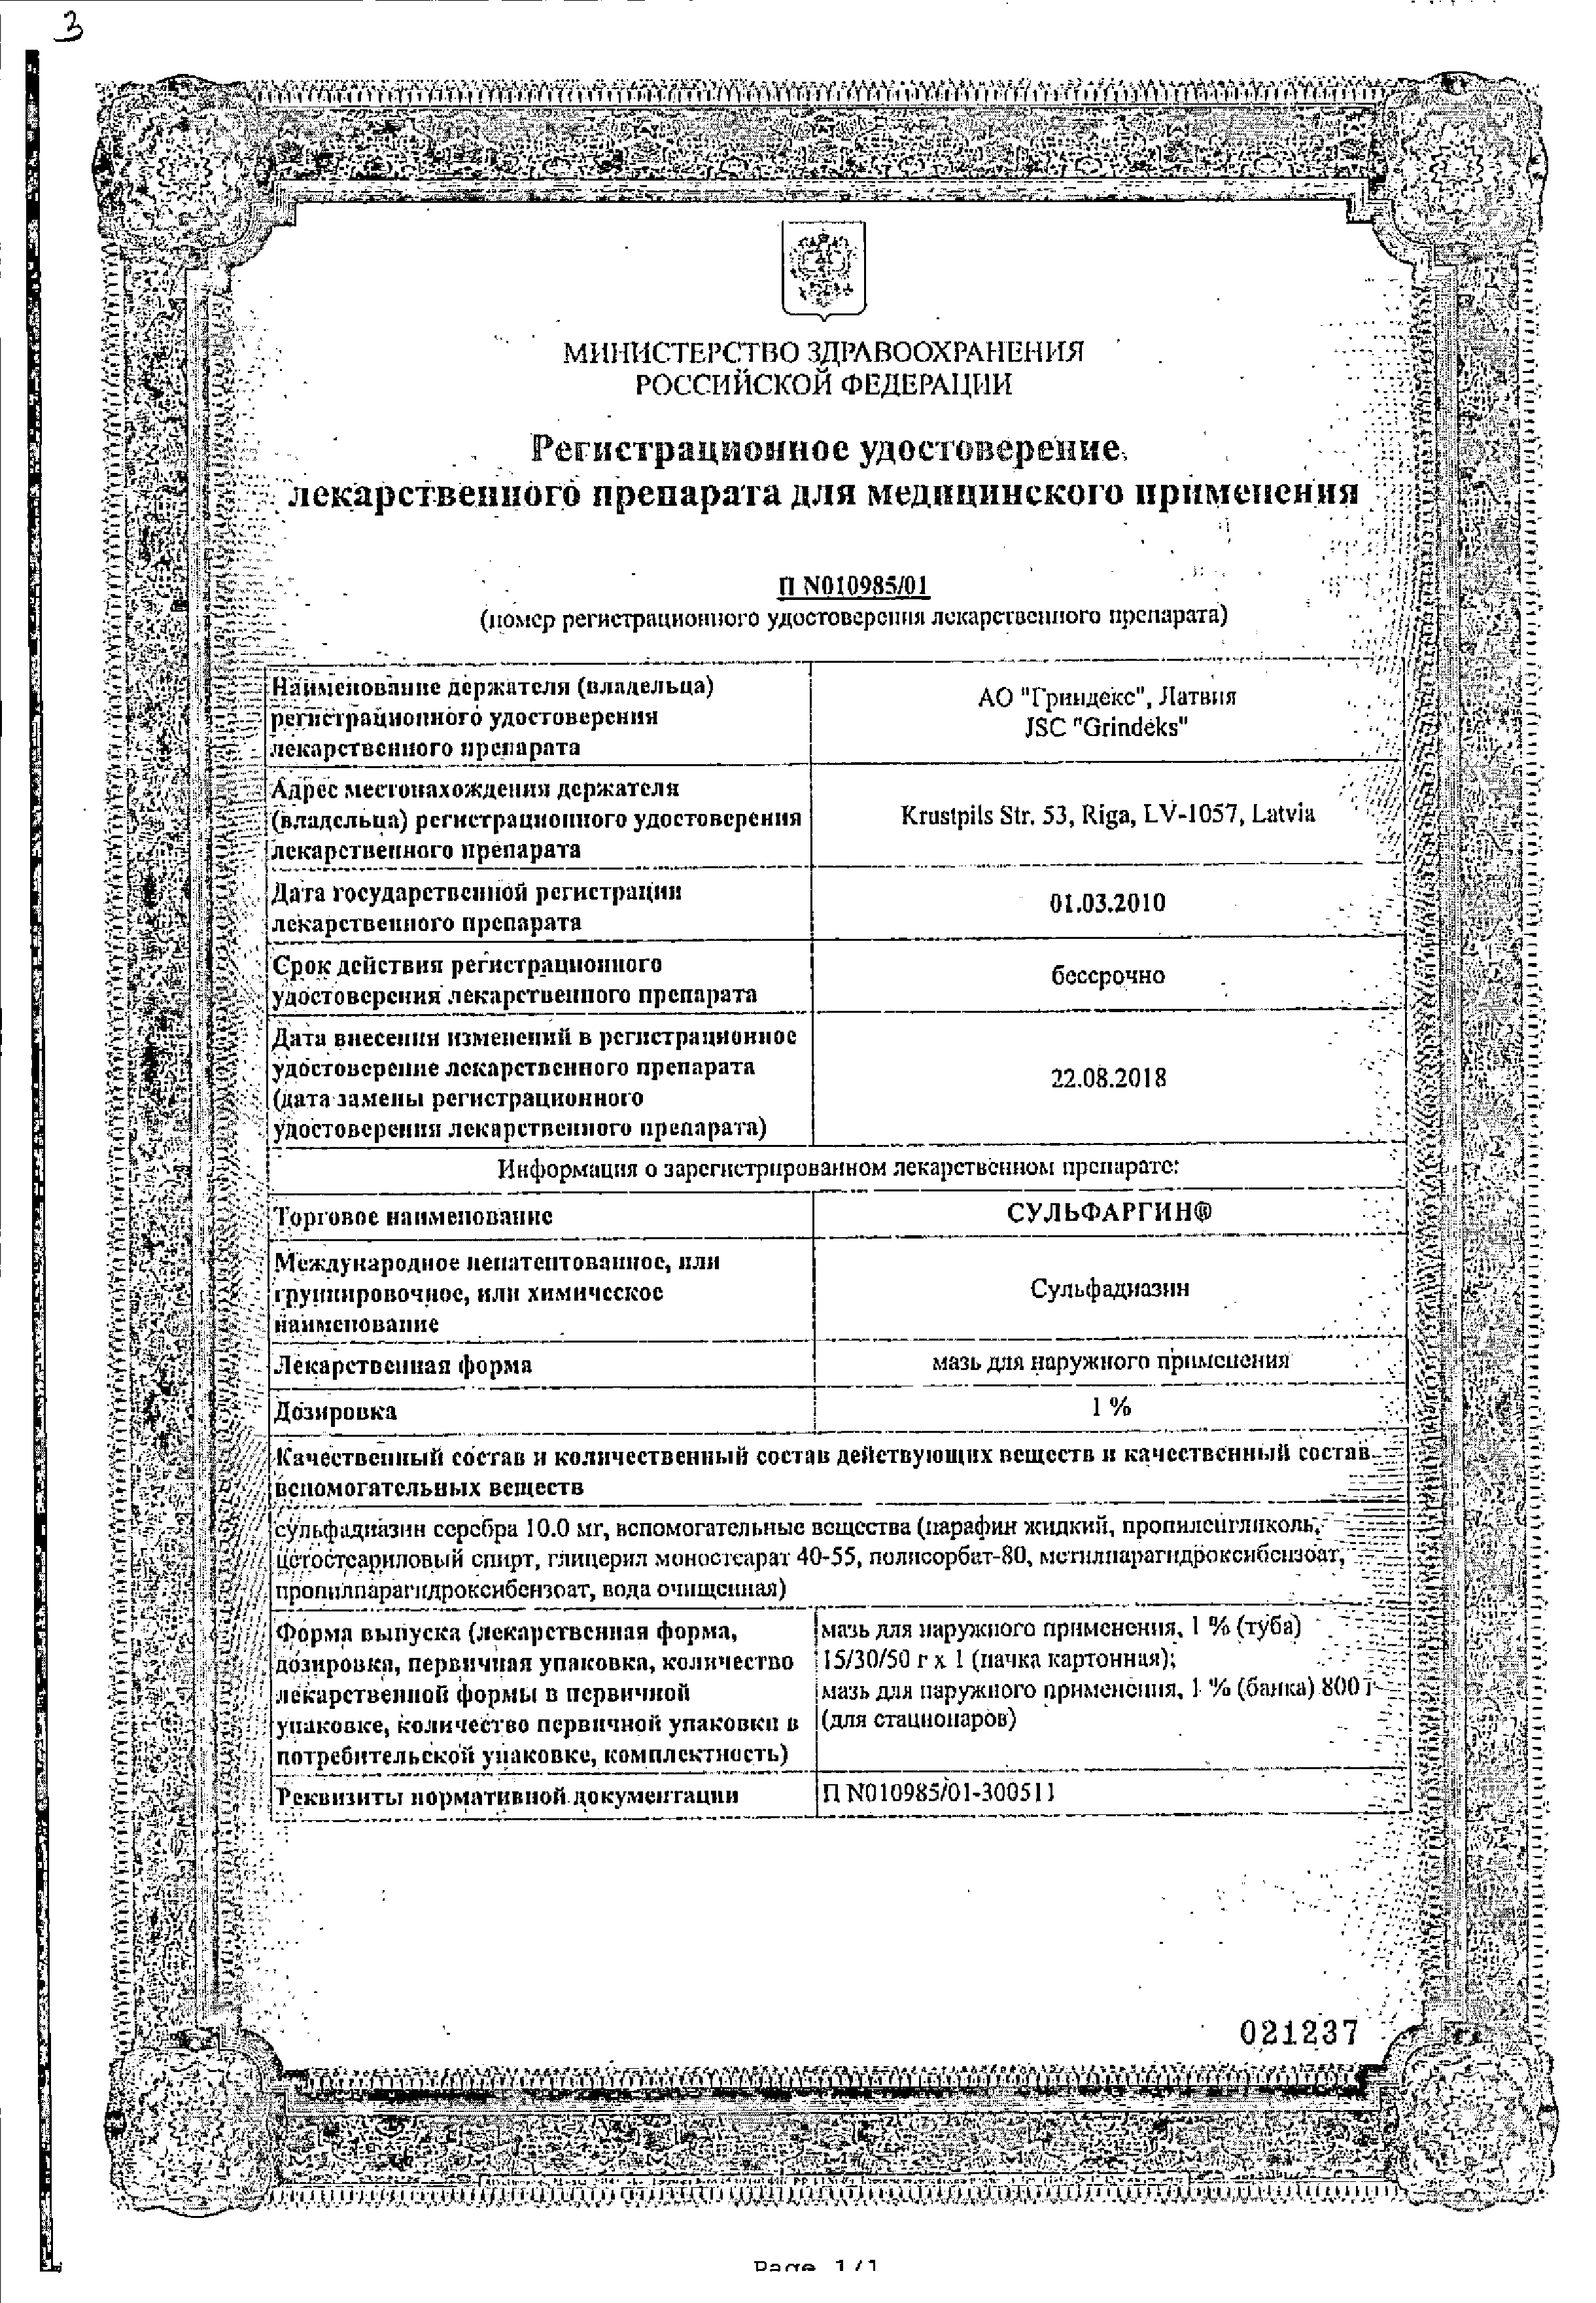 Сульфаргин сертификат